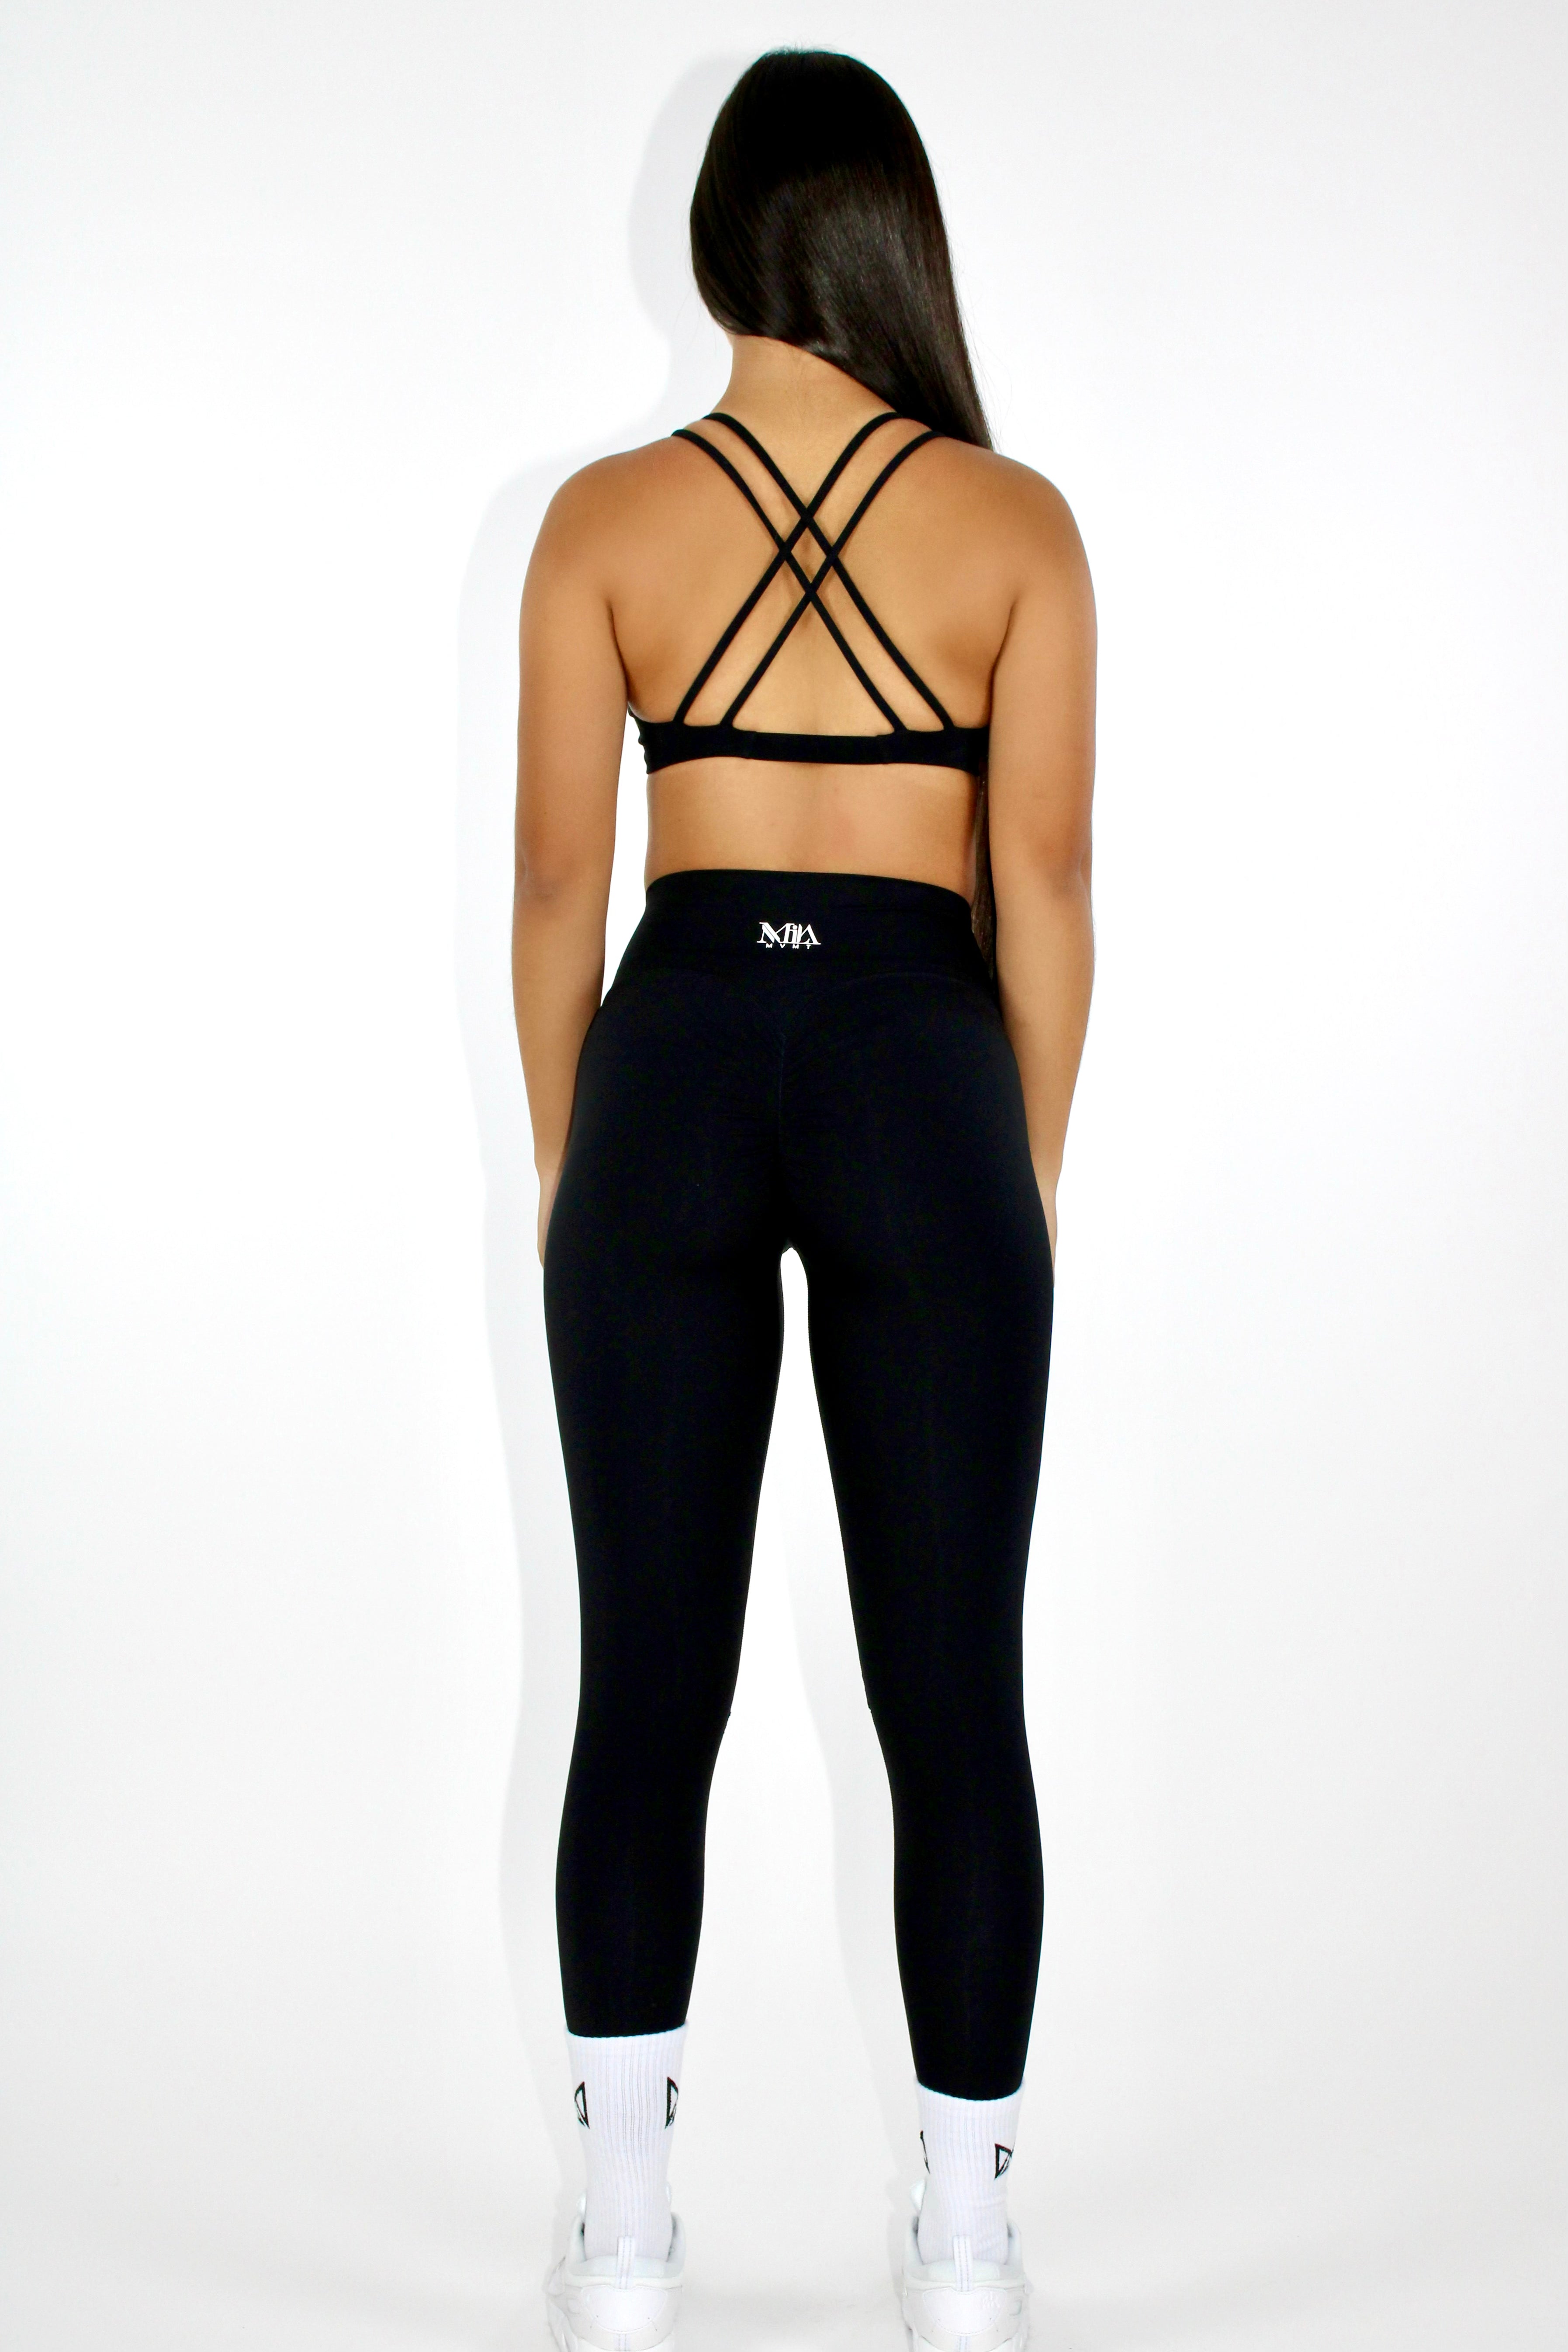 MILA MVMT Athletic Sportswear Aria Sports Bra & Buttery Soft Leggings & Shorts Gym Set Black Strappy Back - Back View